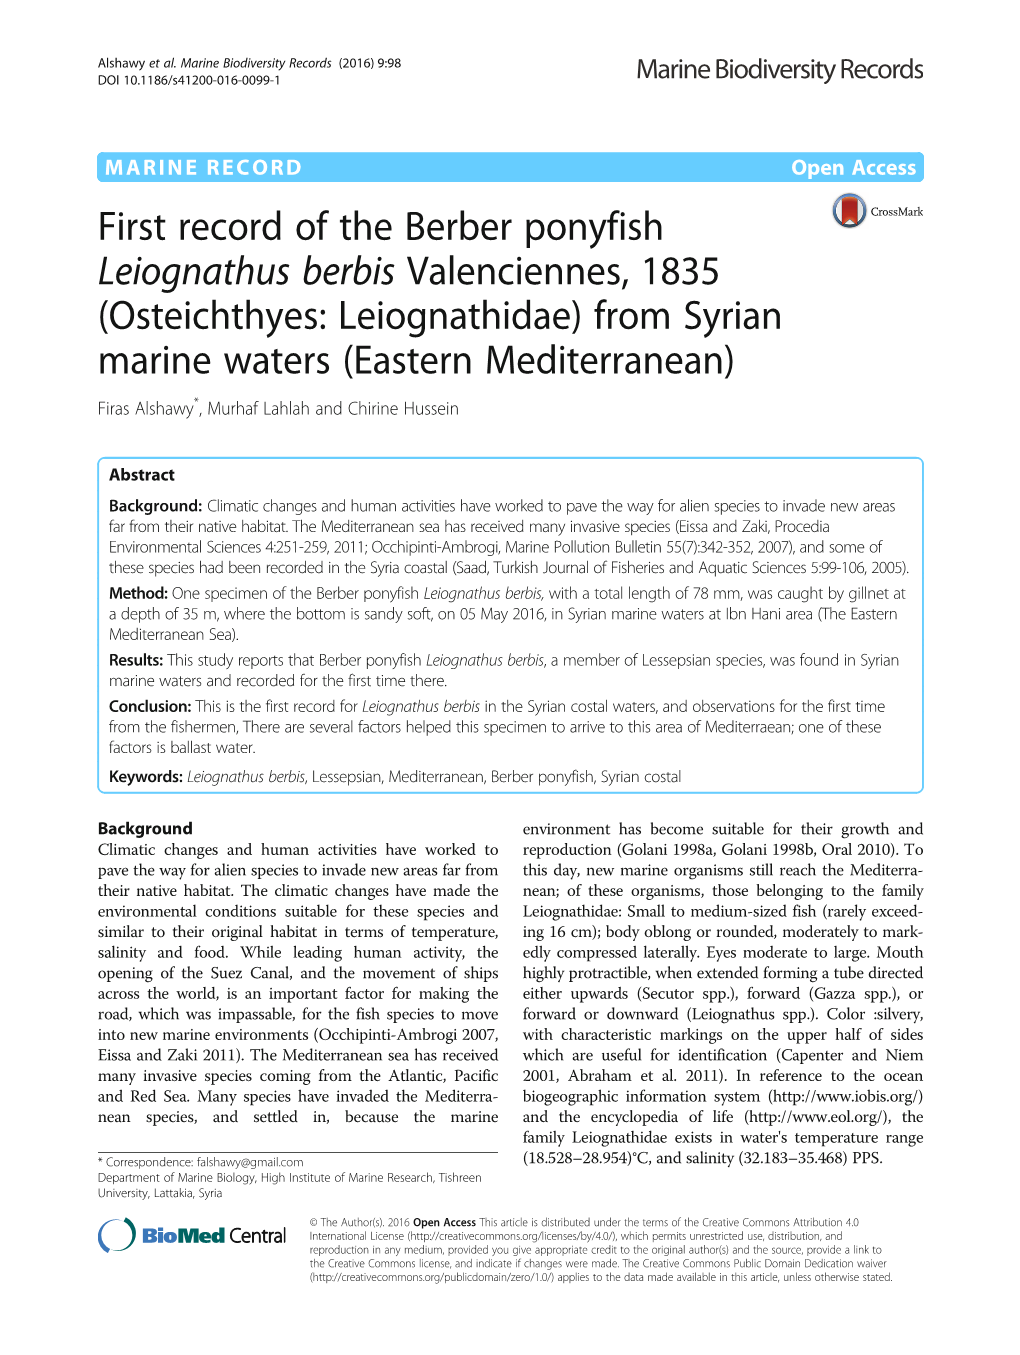 First Record of the Berber Ponyfish Leiognathus Berbis Valenciennes